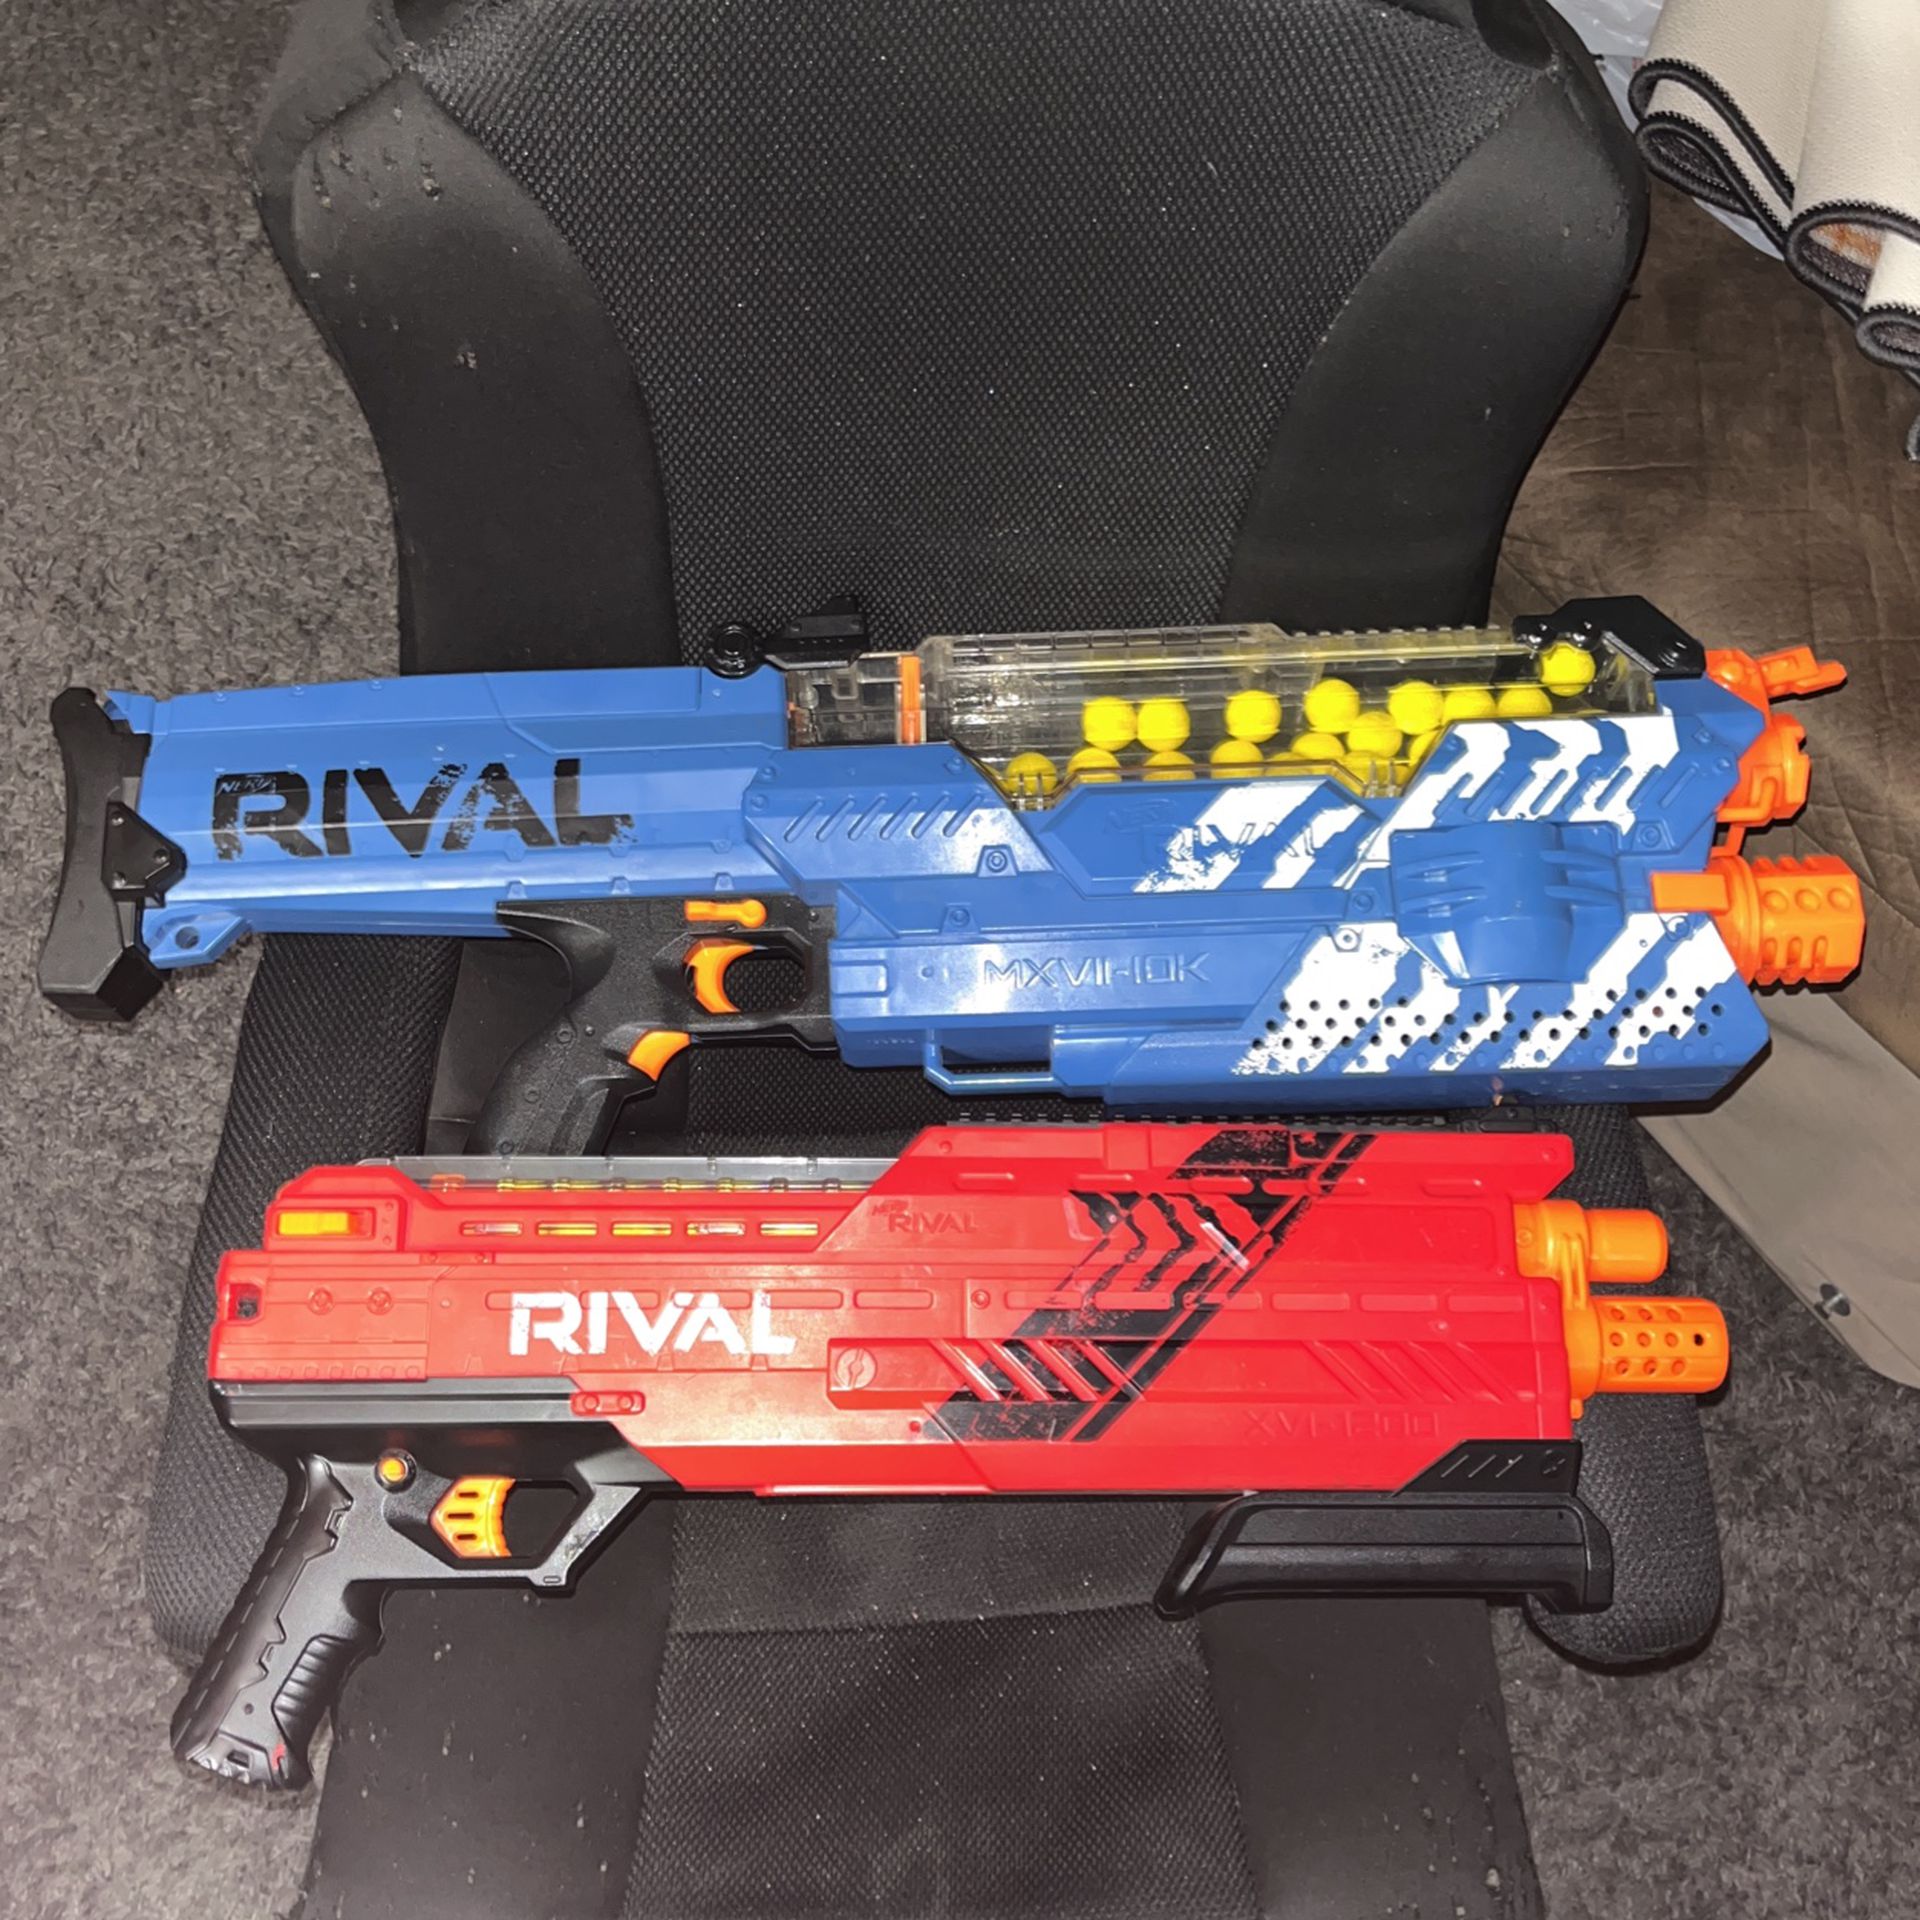 Rival Nerf  Guns